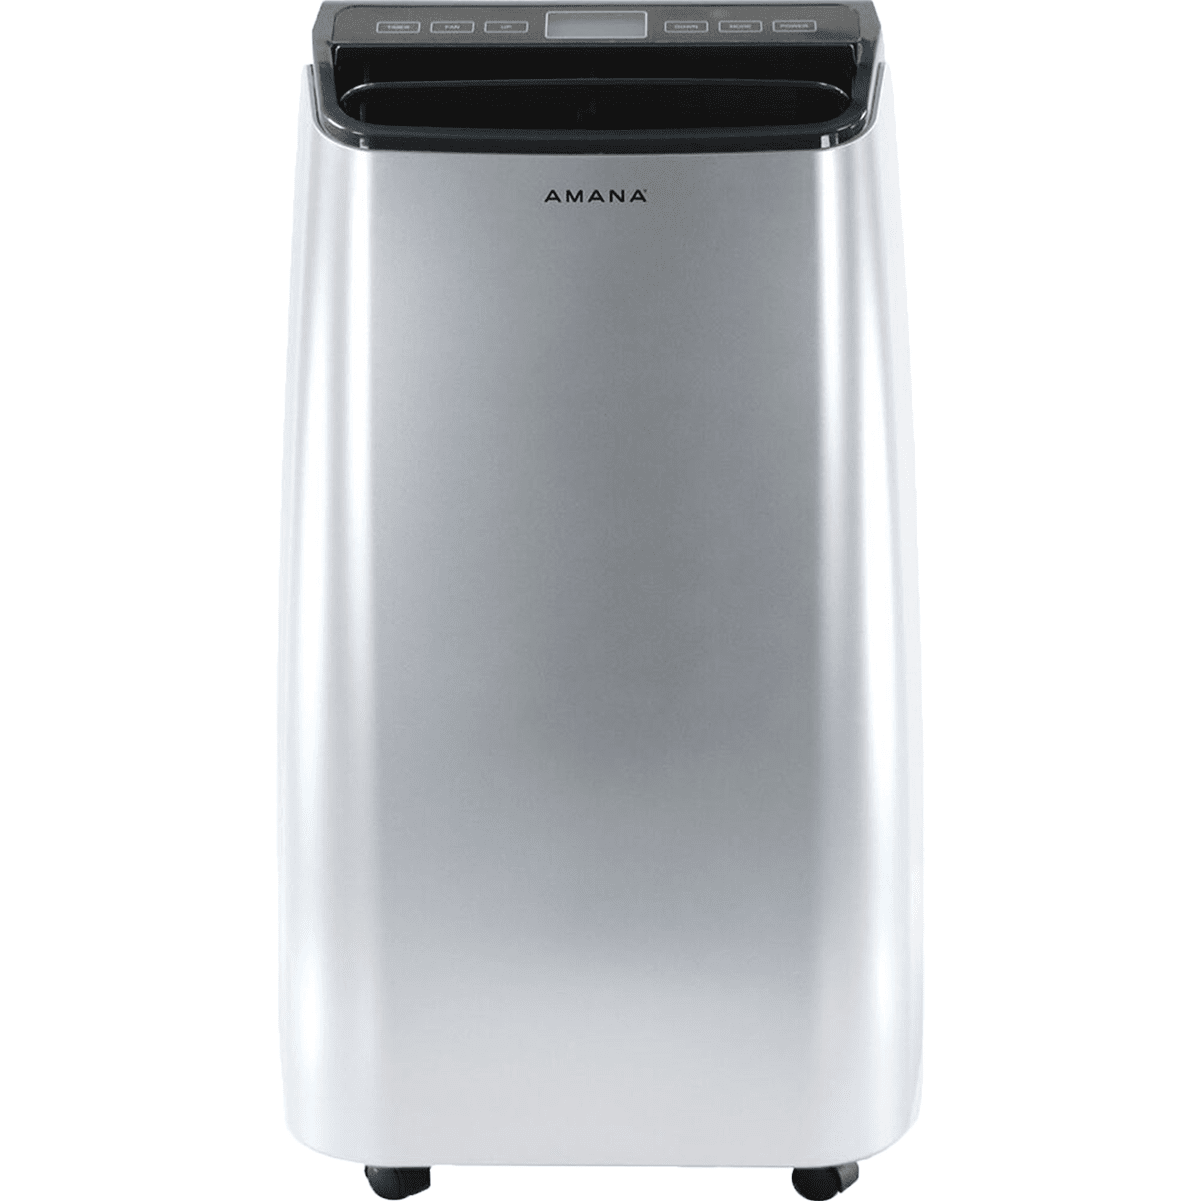 Amana 10,000 BTU Portable Air Conditioner-Grey/Black